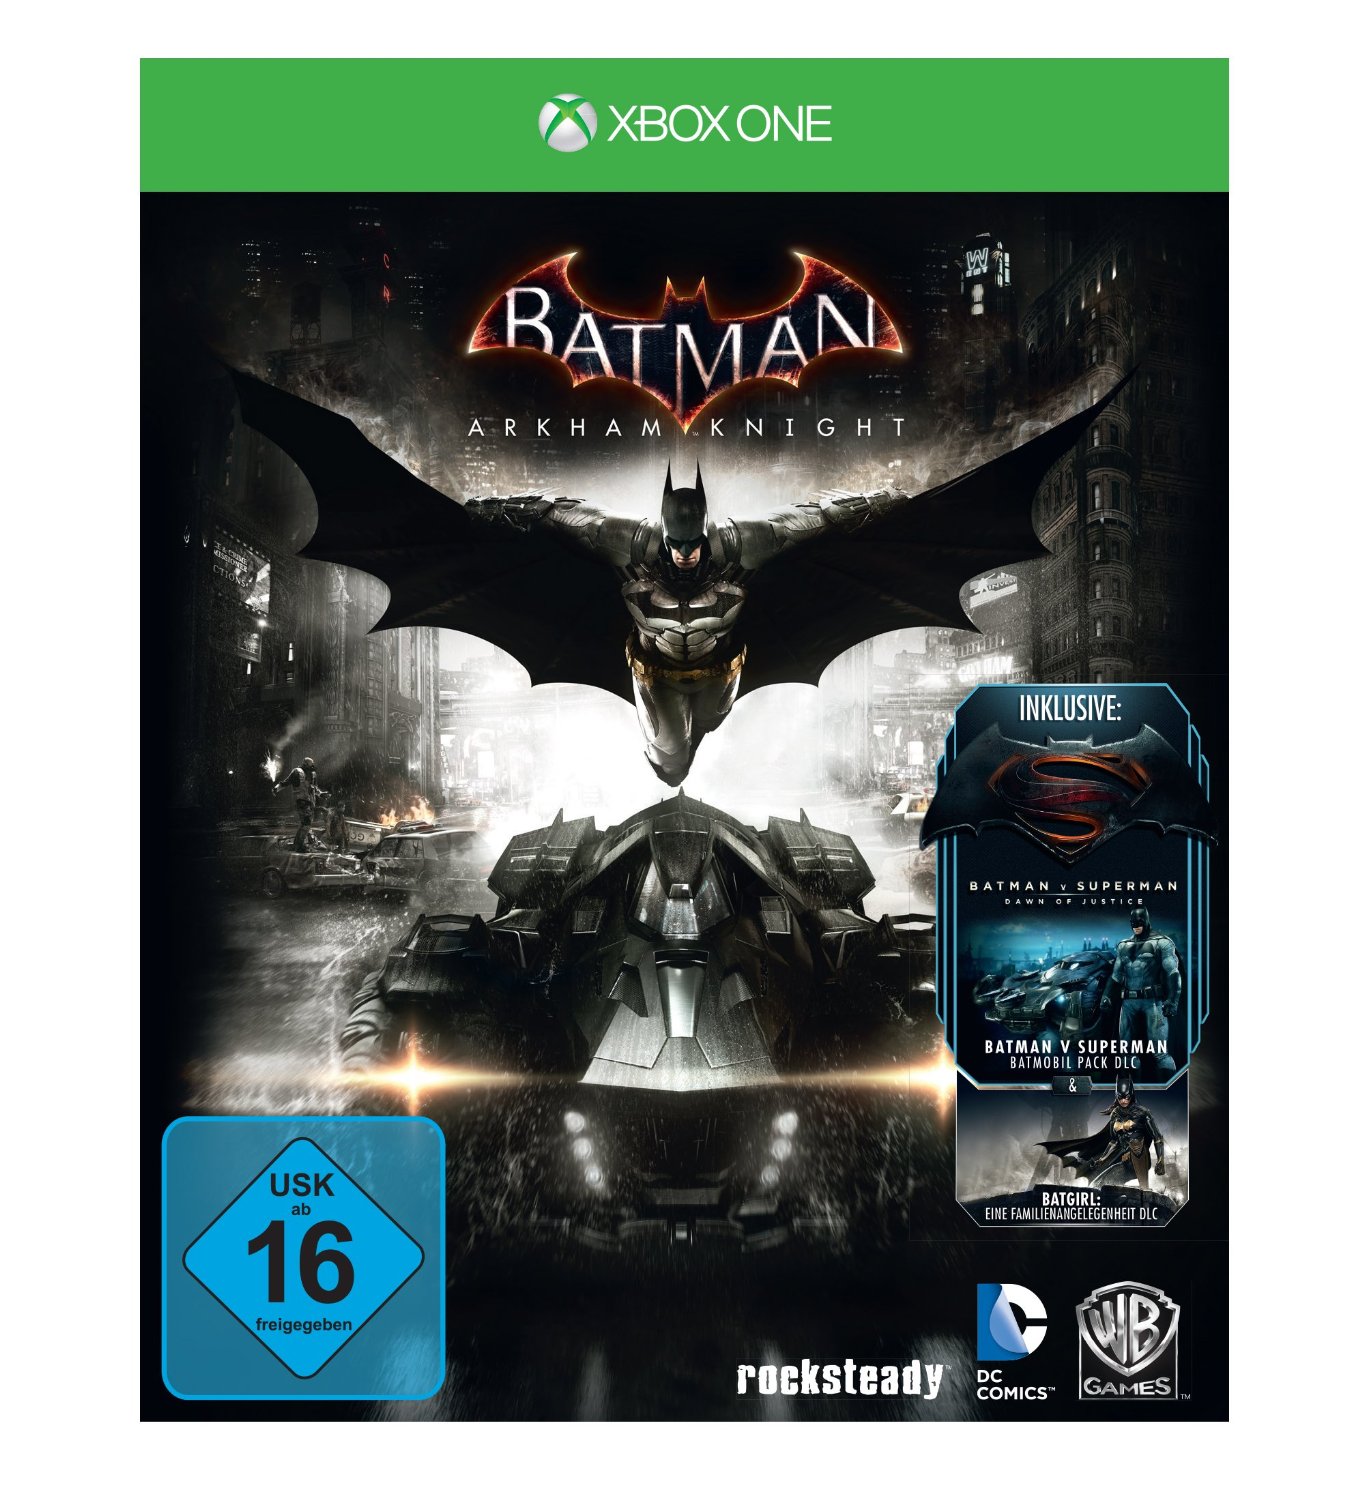 Batman premium edition. Batman: рыцарь Аркхема (Premium Edition) Xbox. Xbox one Batman Arkham. Бэтмен Аркхем кнайт на Xbox 360. Batman Arkham Knight Xbox one.